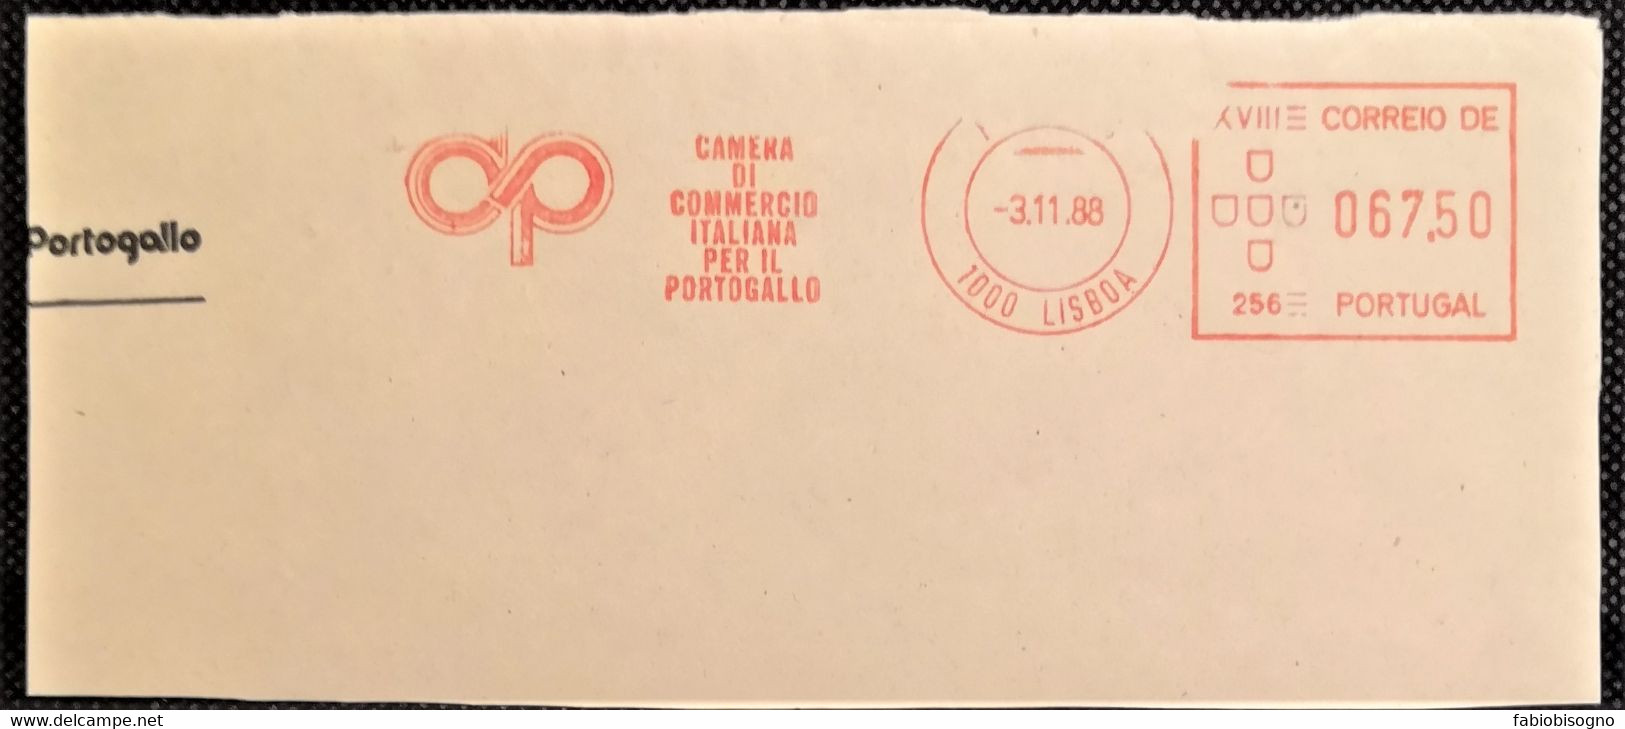 Portugal Lisboa 1988 - Camera Di Commercio Italiana Per Il Portogallo - EMA Meter Freistempel Fragment - Frankeermachines (EMA)